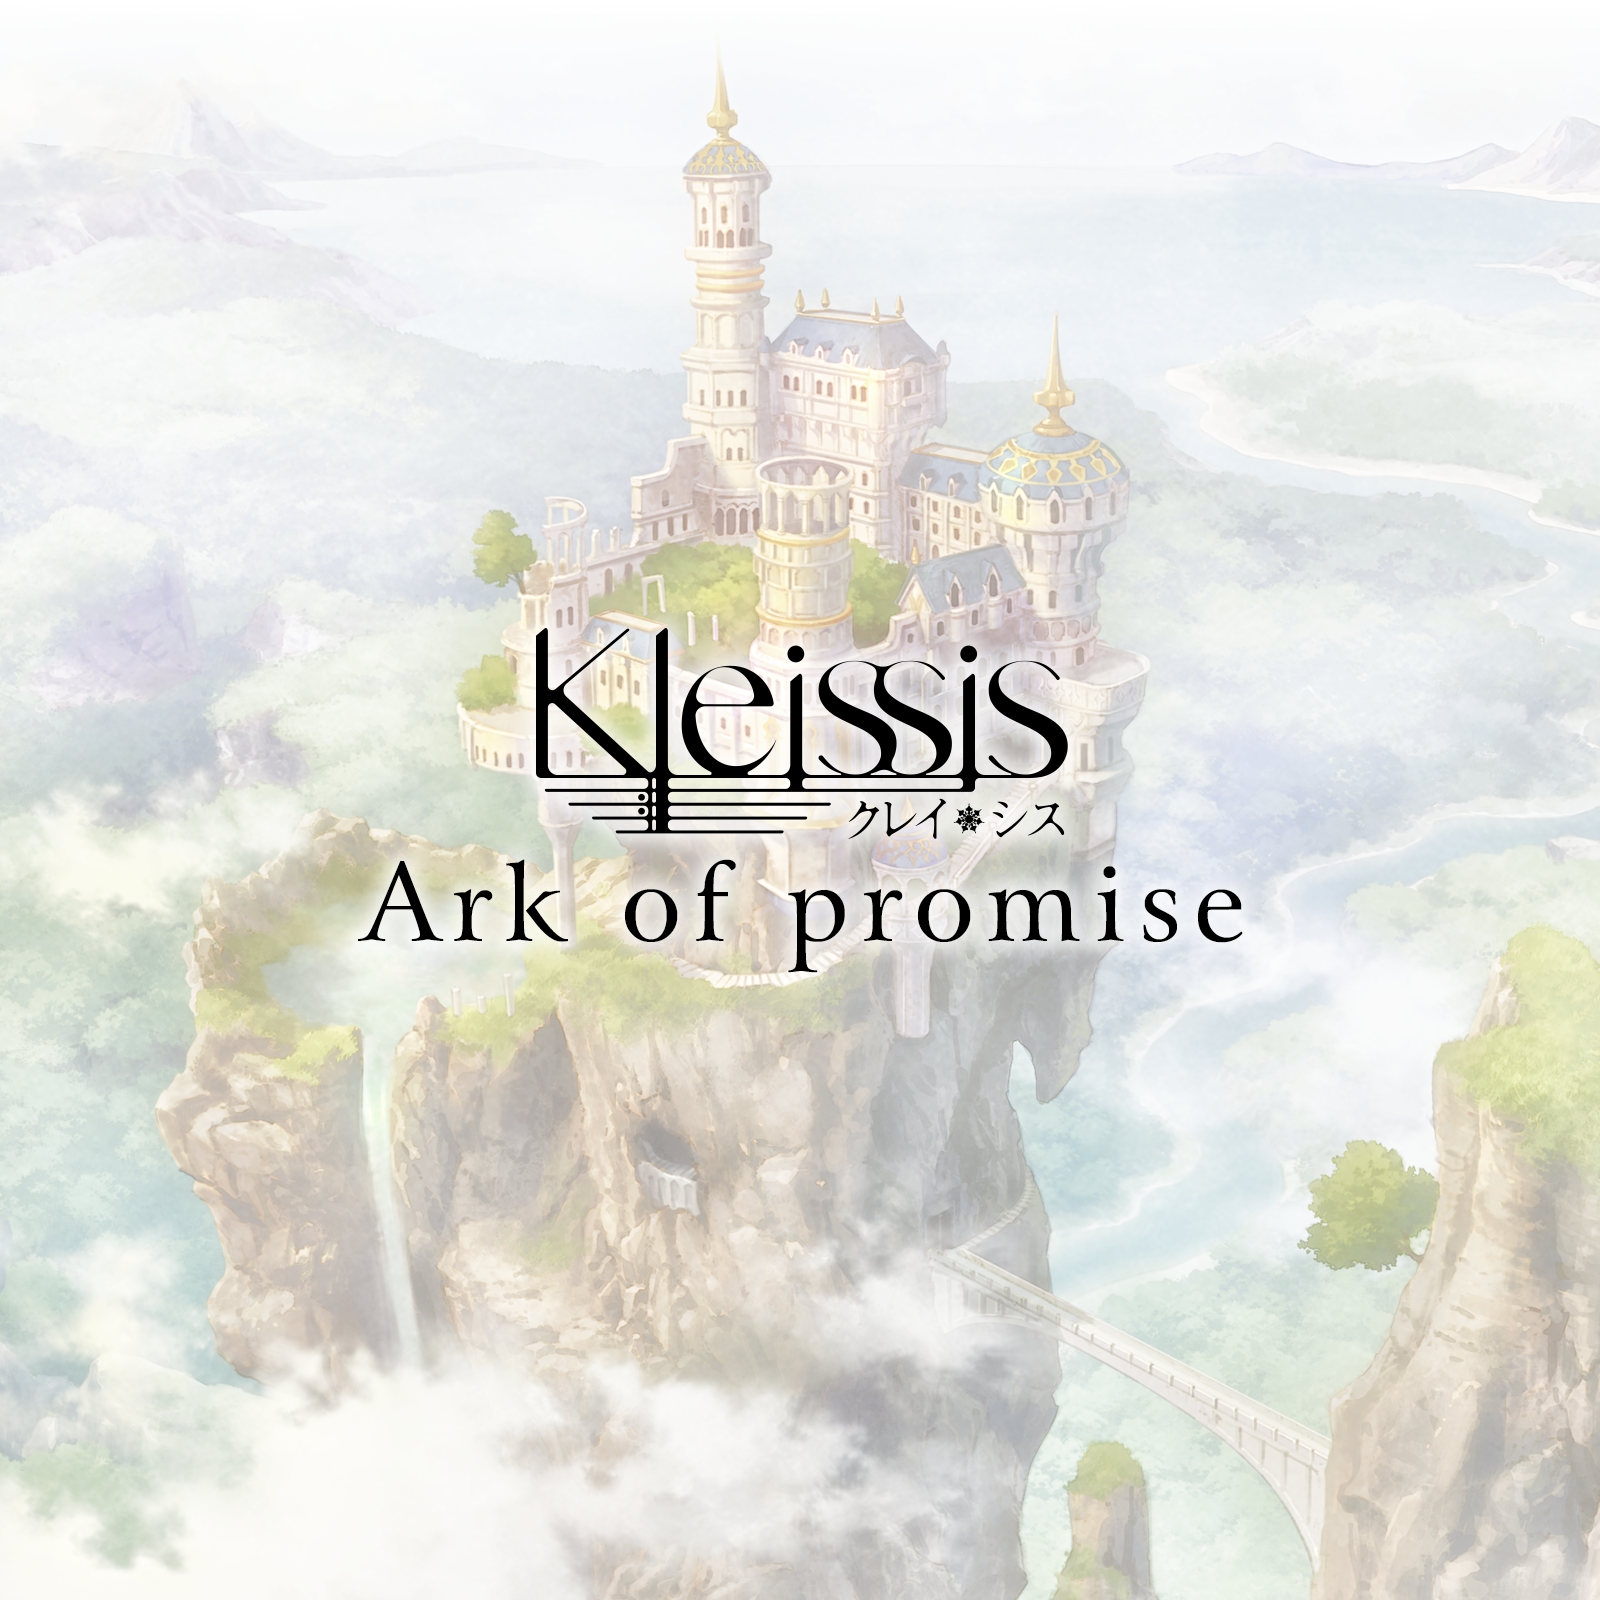 4th SINGLE「Ark of promise」